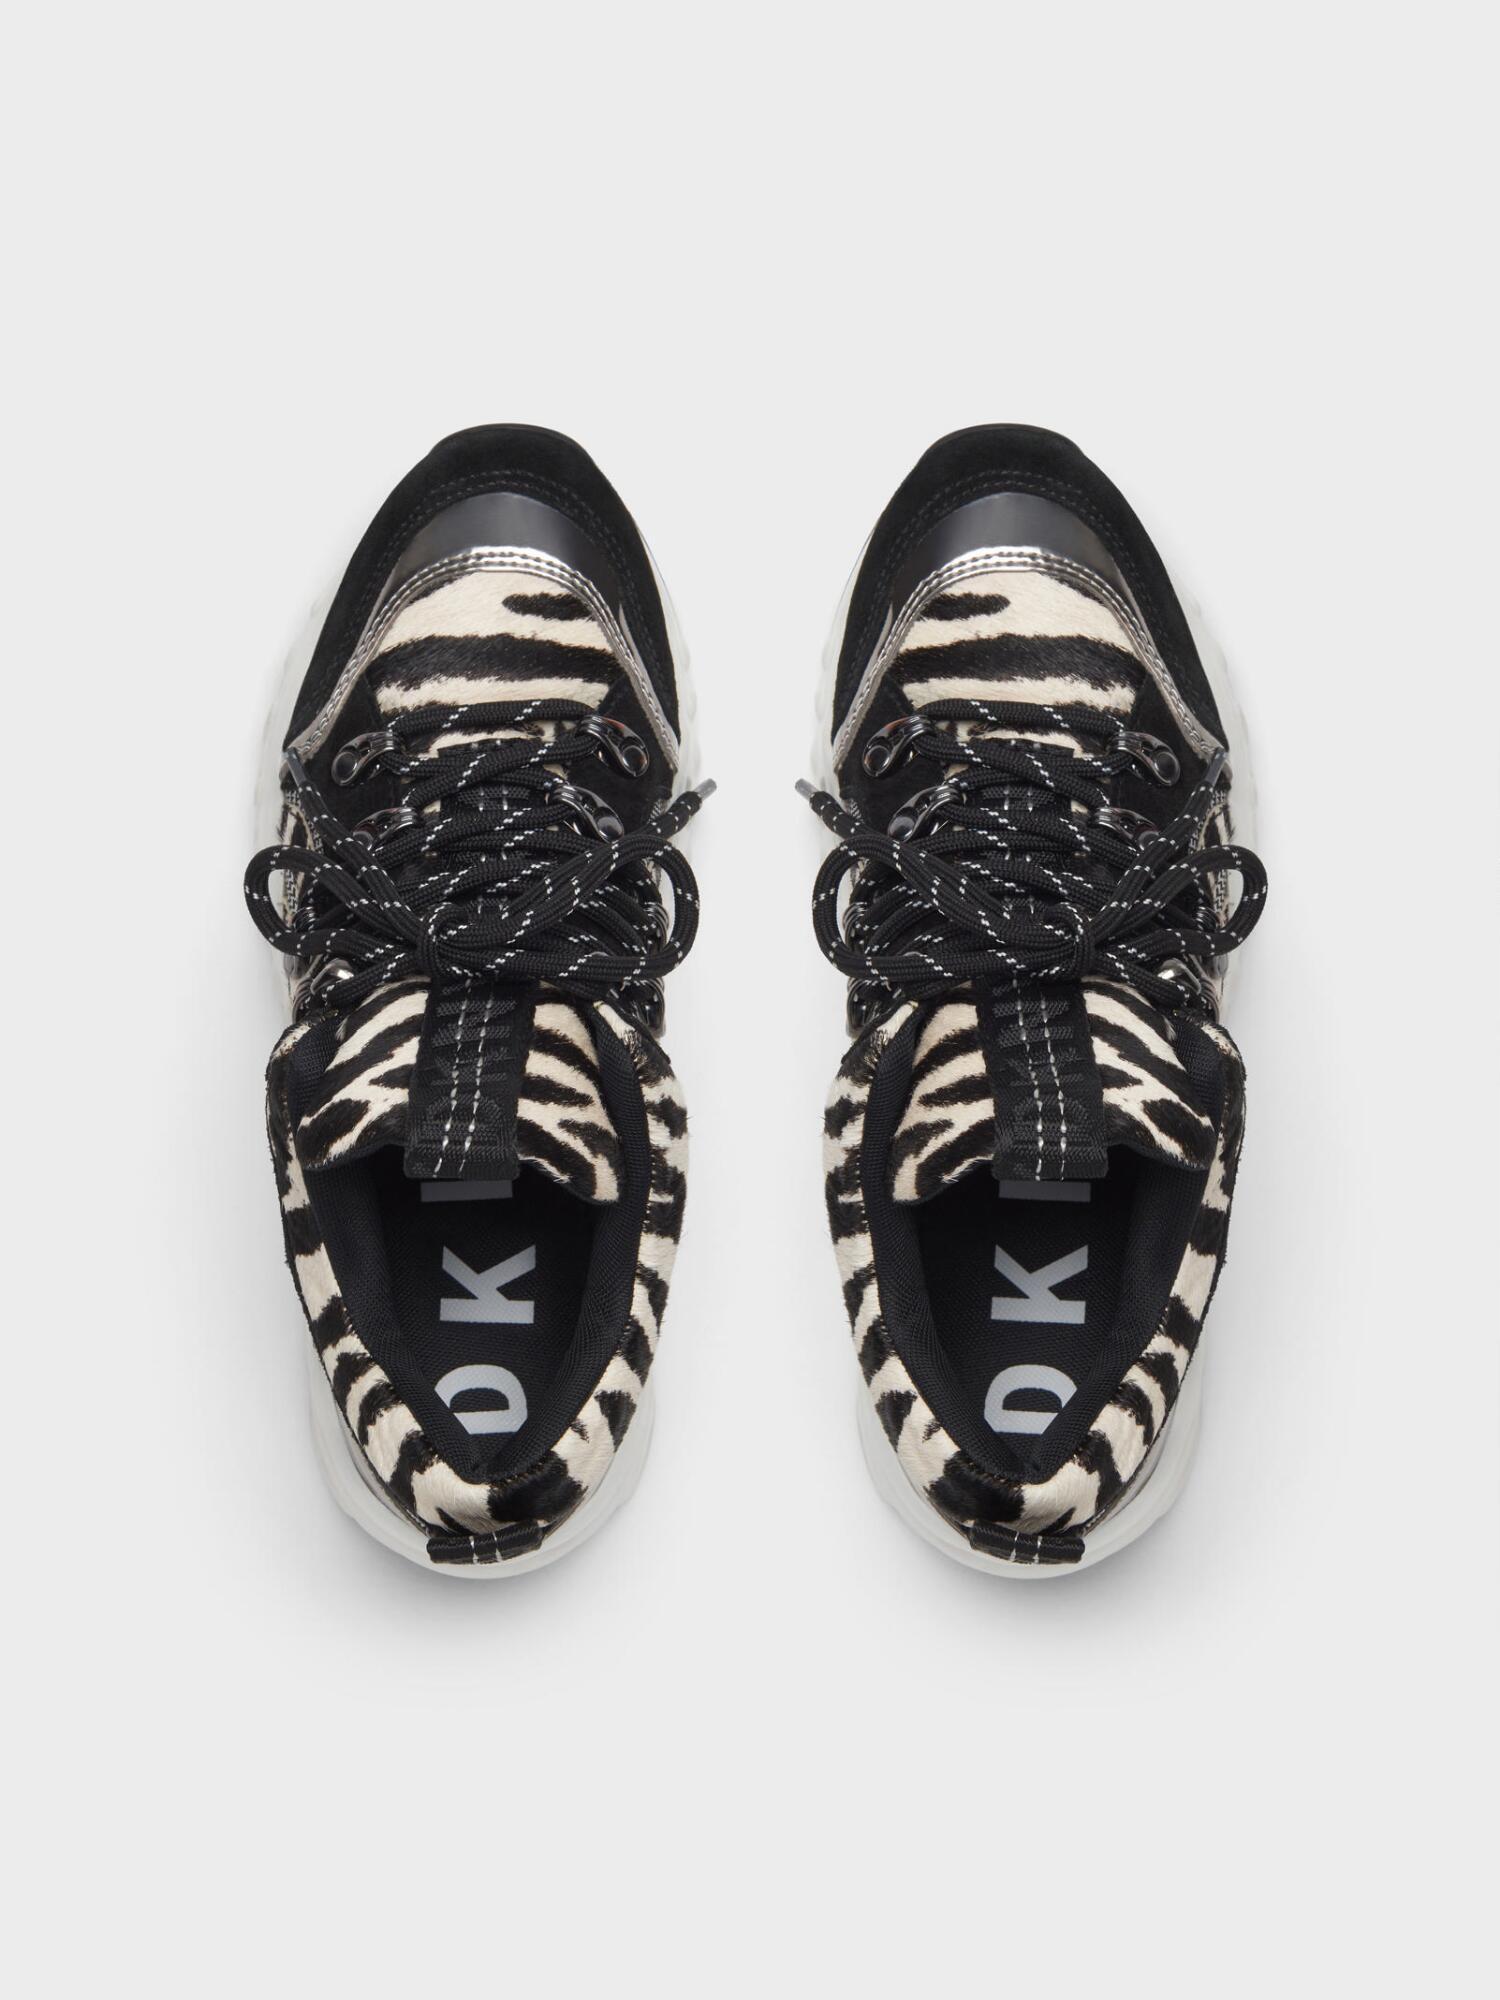 DKNY Suede Avi Sneaker in Black/White 